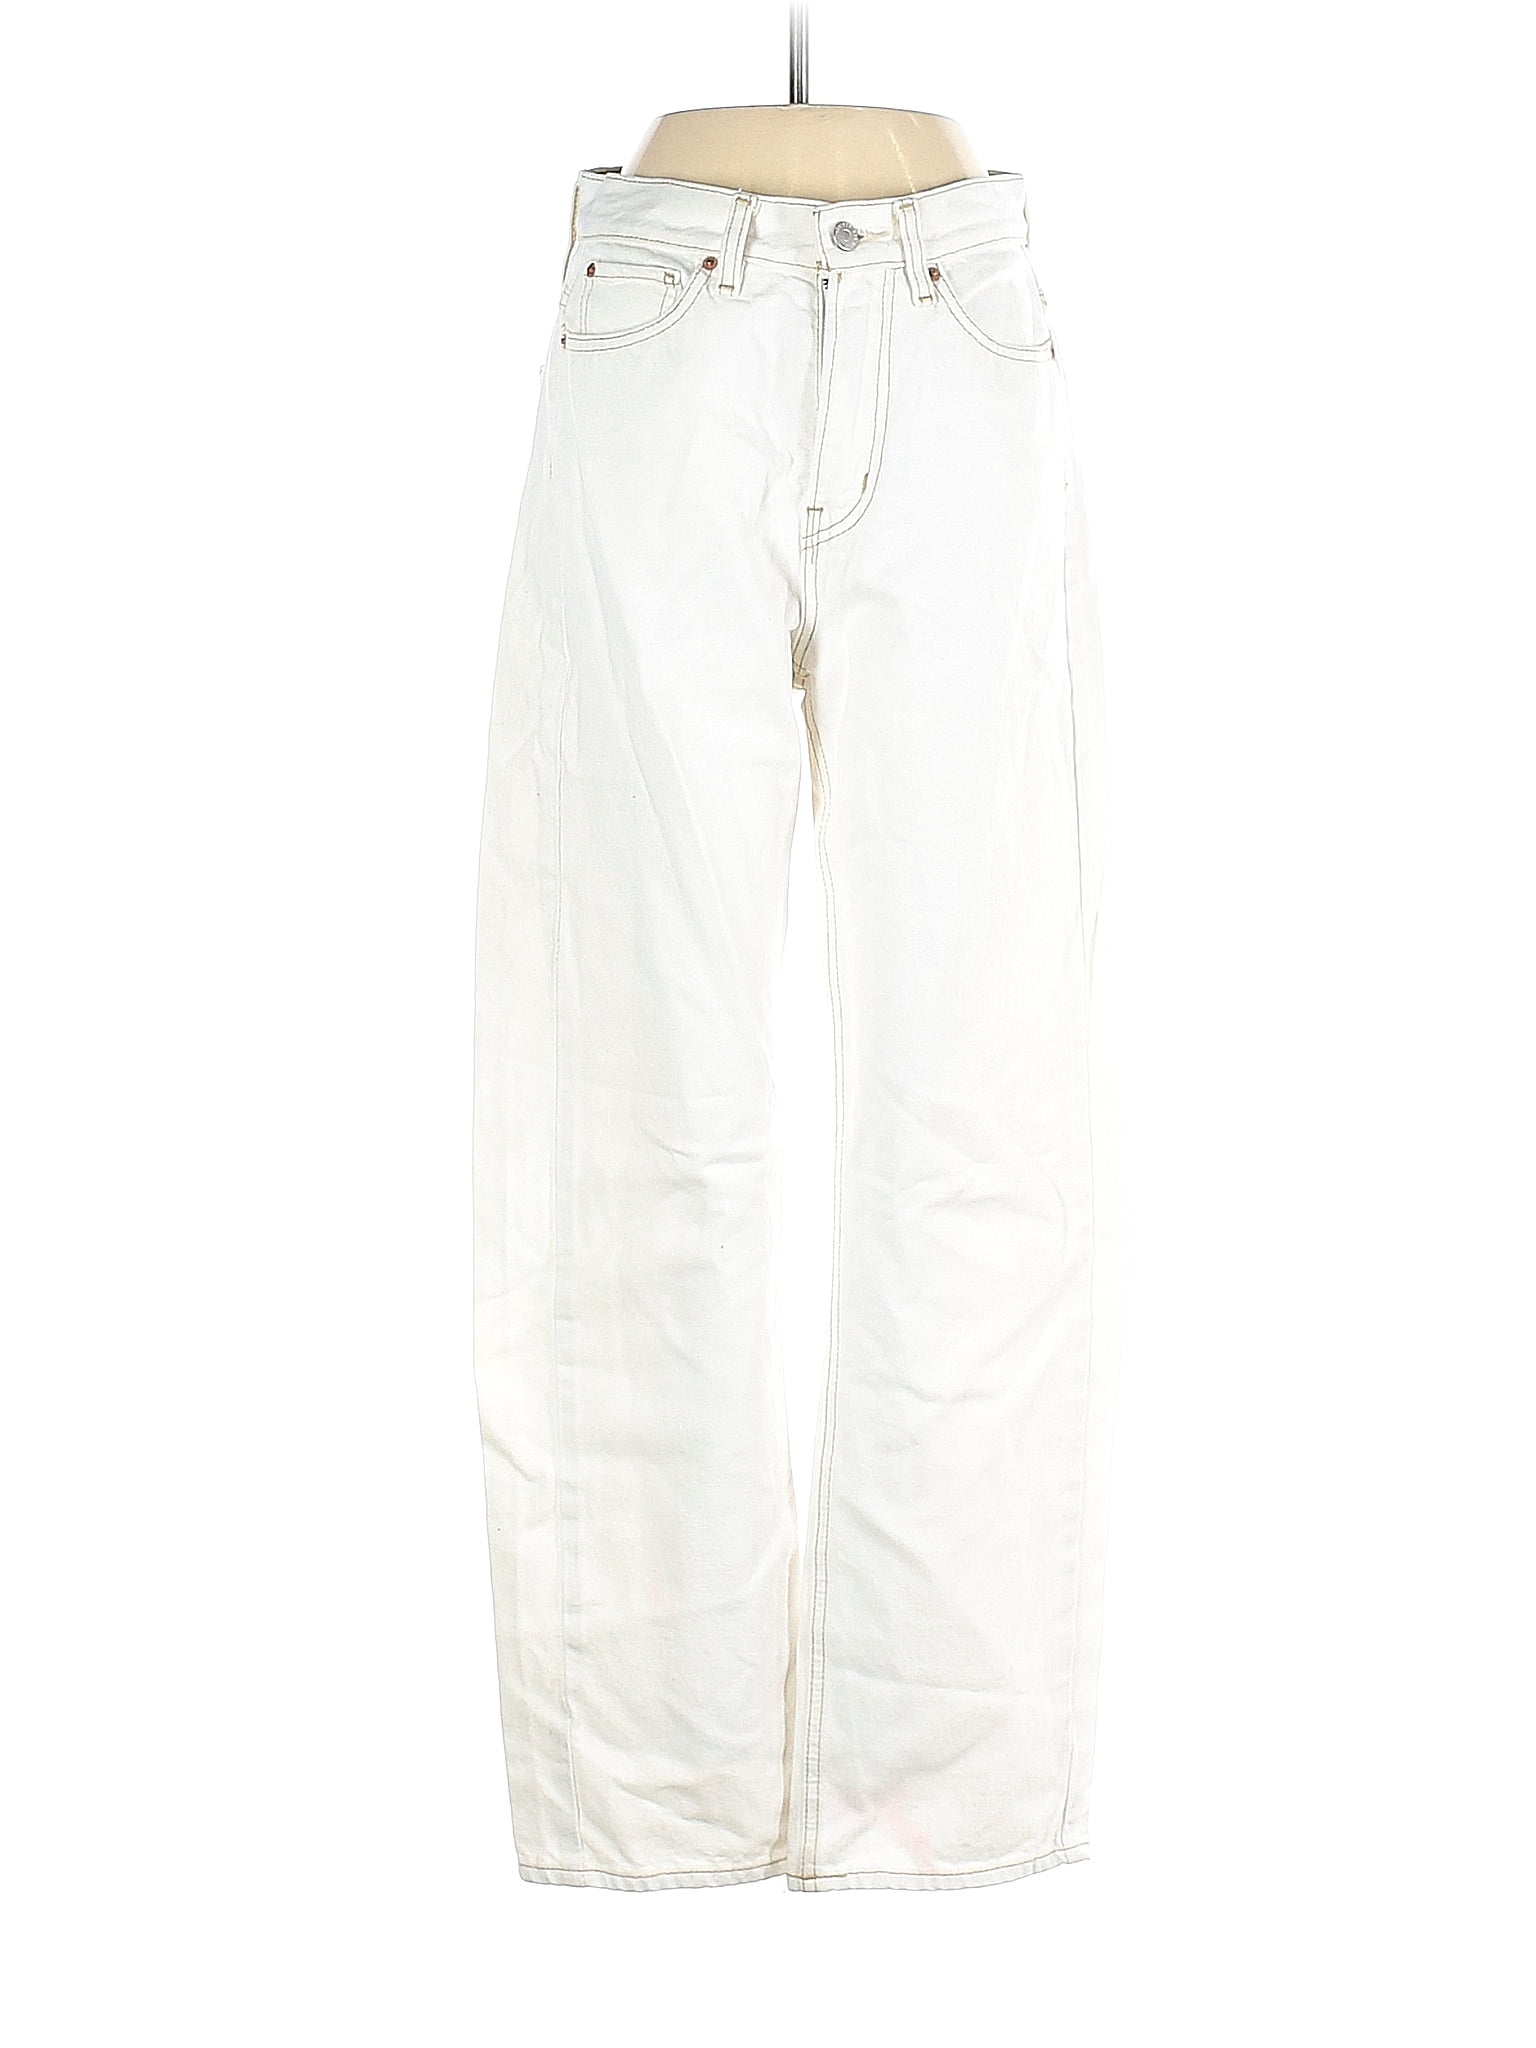 BDG 100% Cotton Solid White Ivory Jeans 26 Waist - 47% off | thredUP